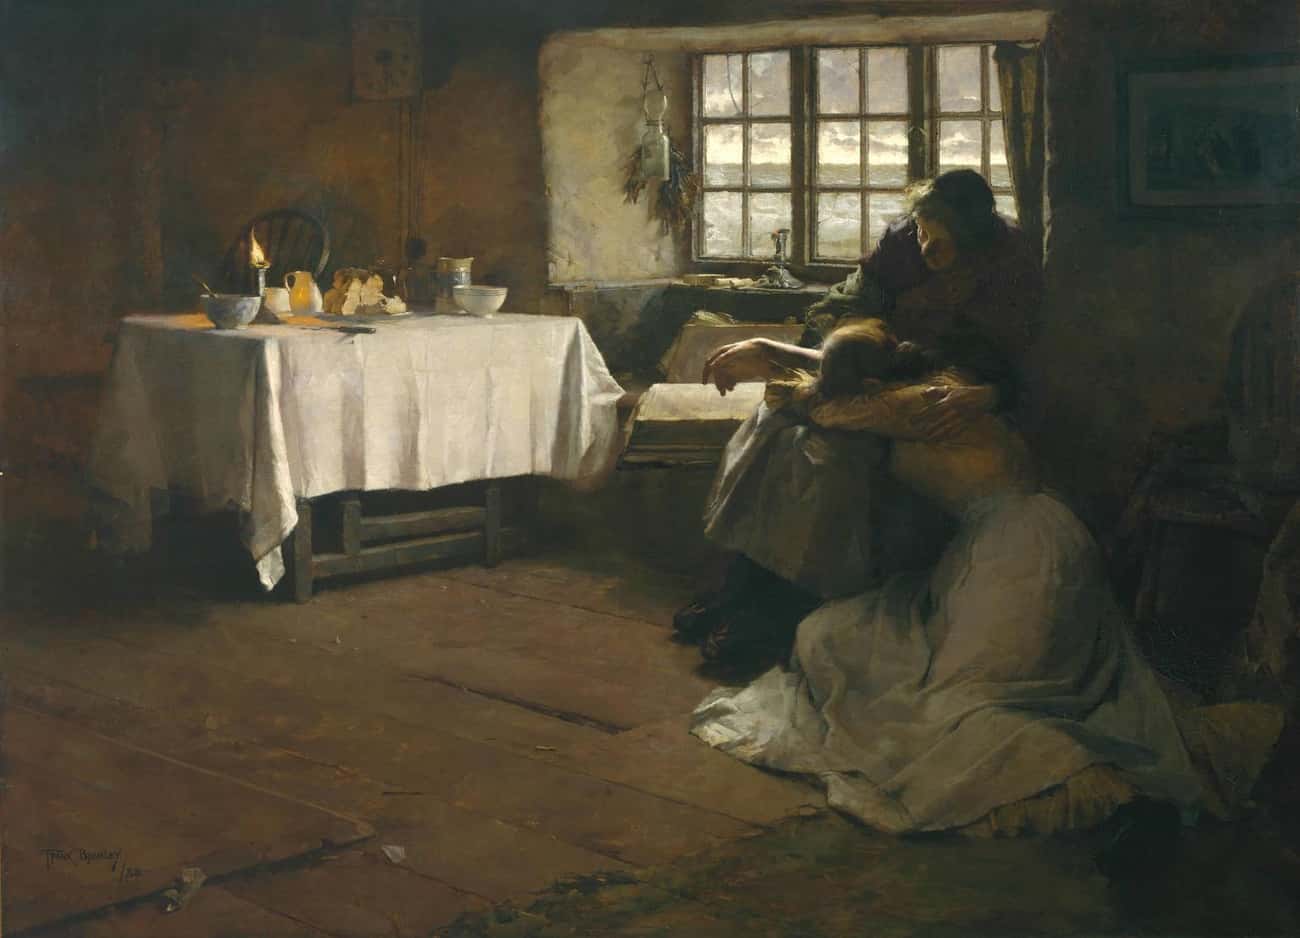 'A Hopeless Dawn' By Frank Bramley, 1888